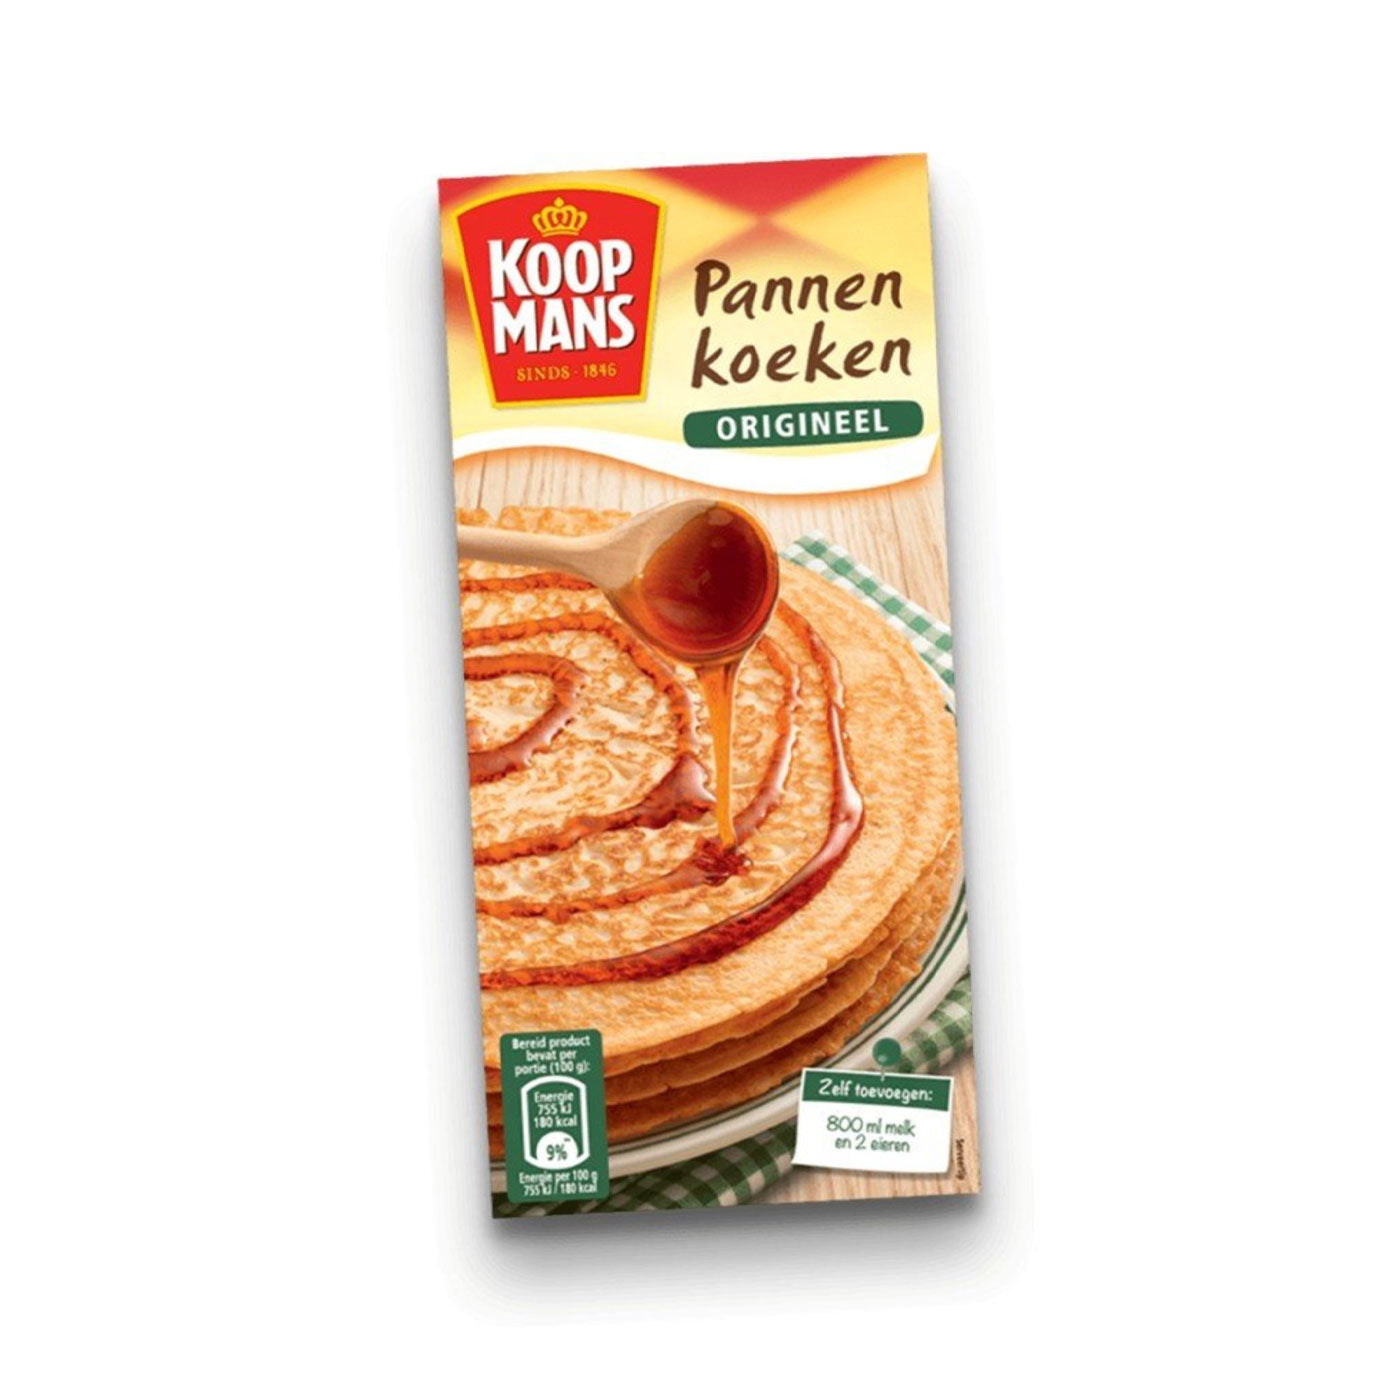 Koopmans Pannenkoekenmix Original - Experience Dutch Cuisine Pancakes - ART Food Store - Image 3